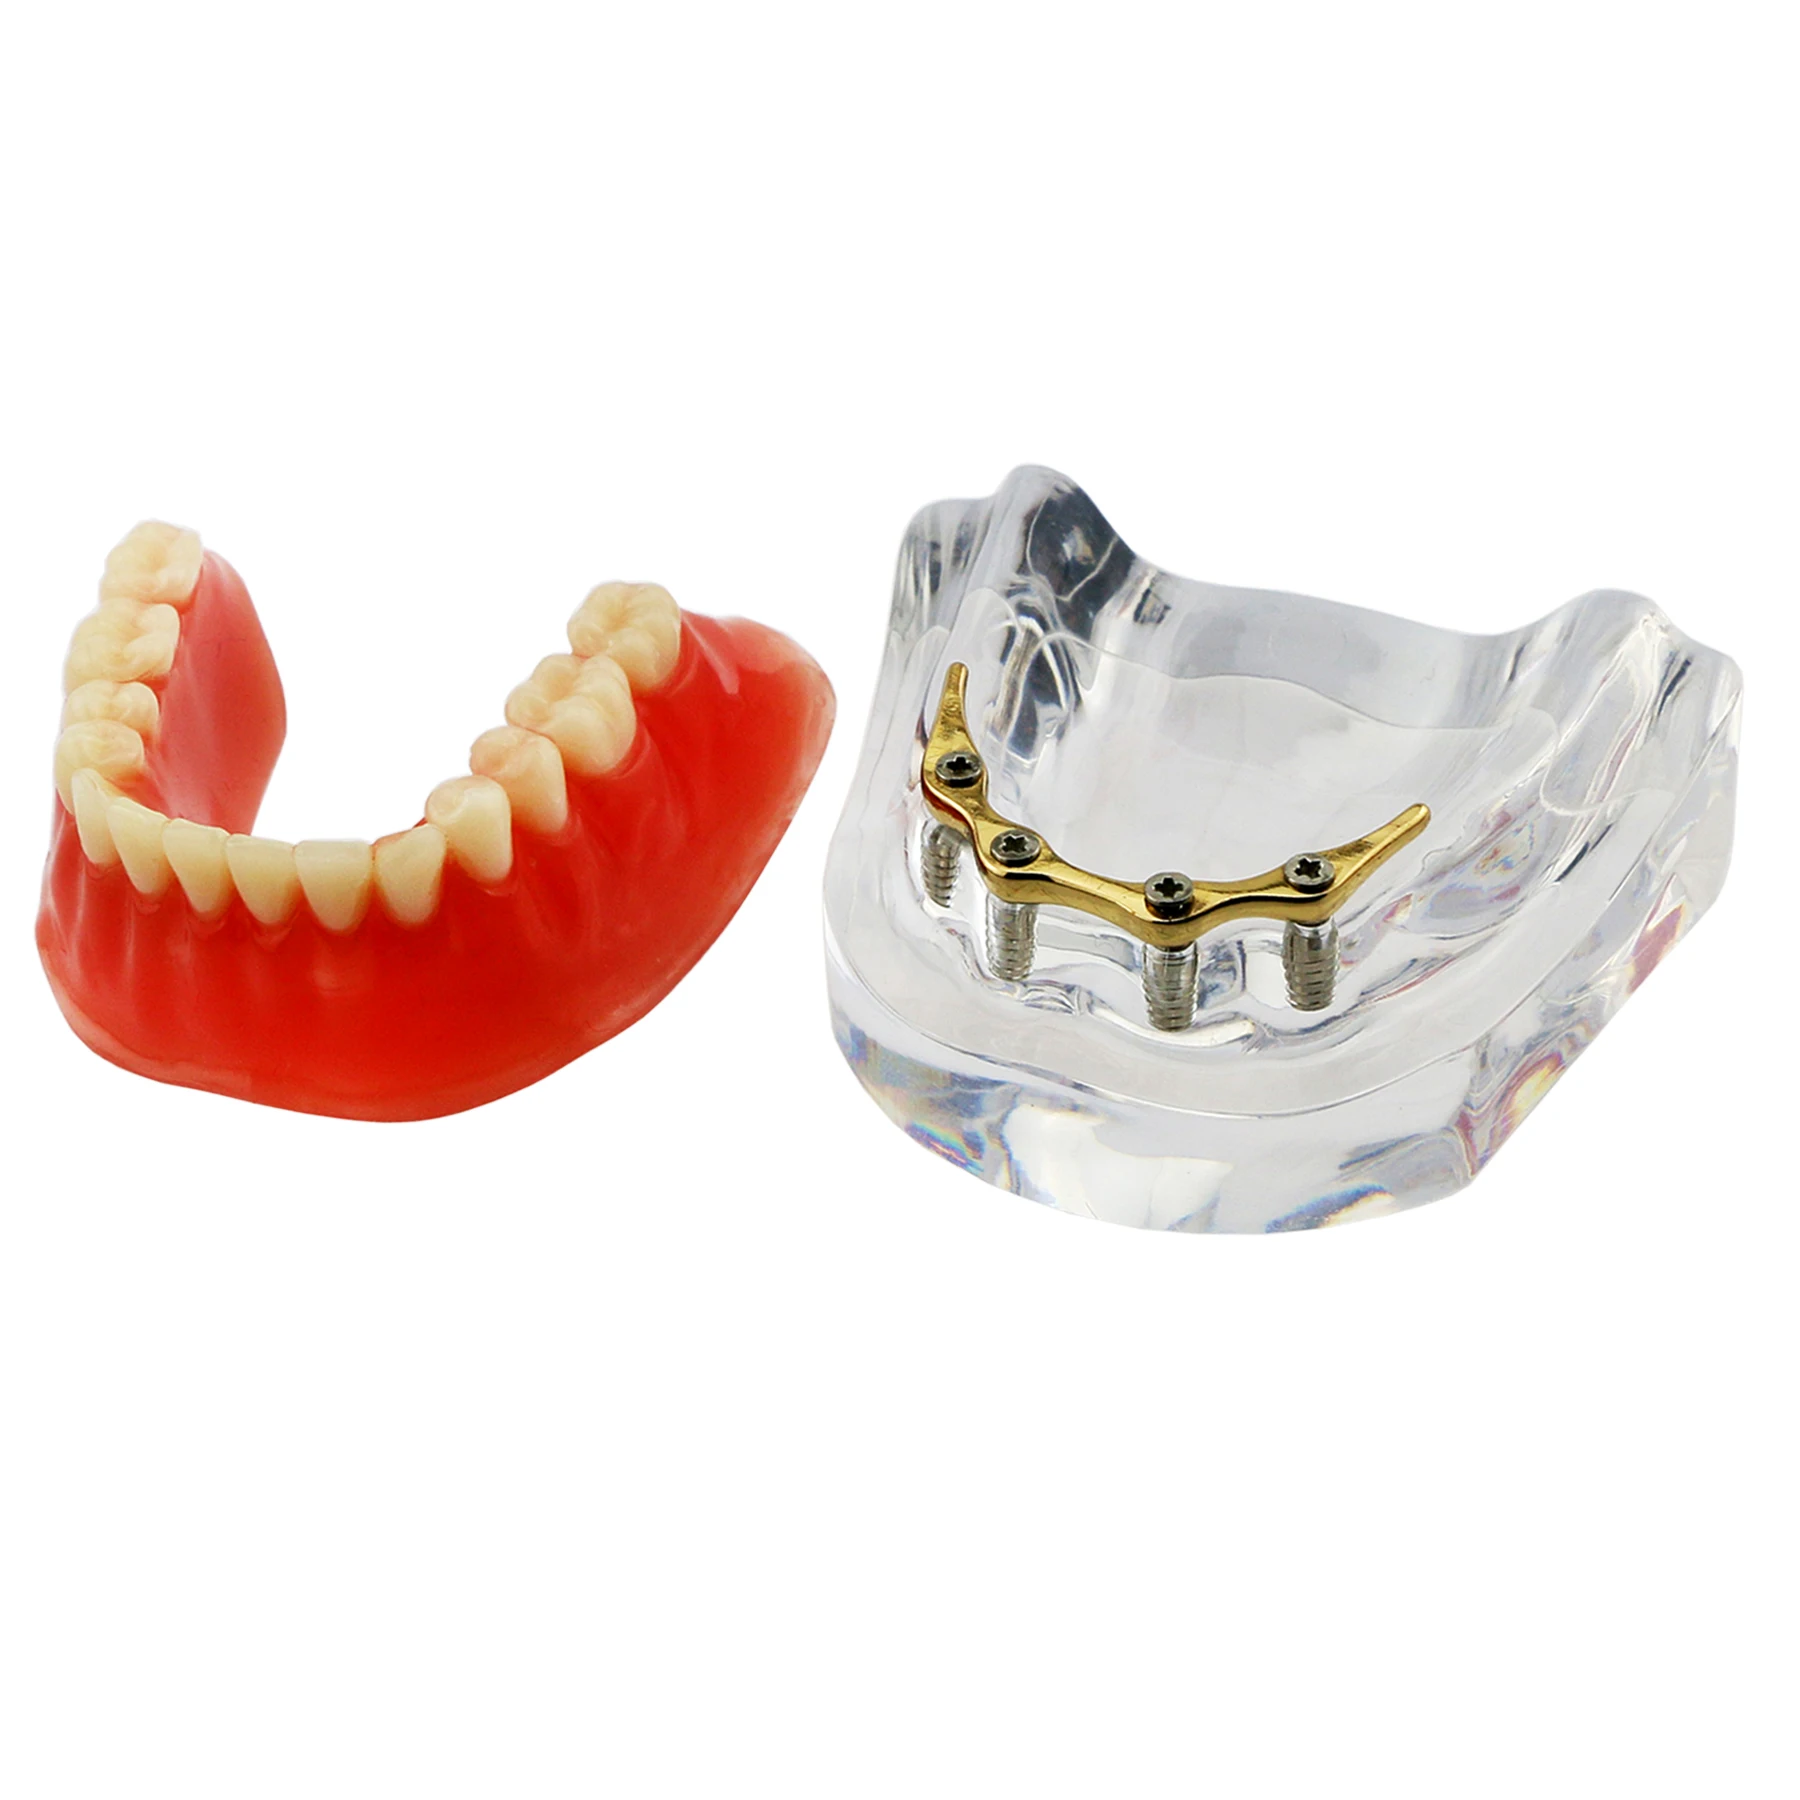 

BEST Dental Implant Teeth Model With Golden Bar Removable Overdenture 4 Implants Inferior Lower Restoration Treatment Demo Study